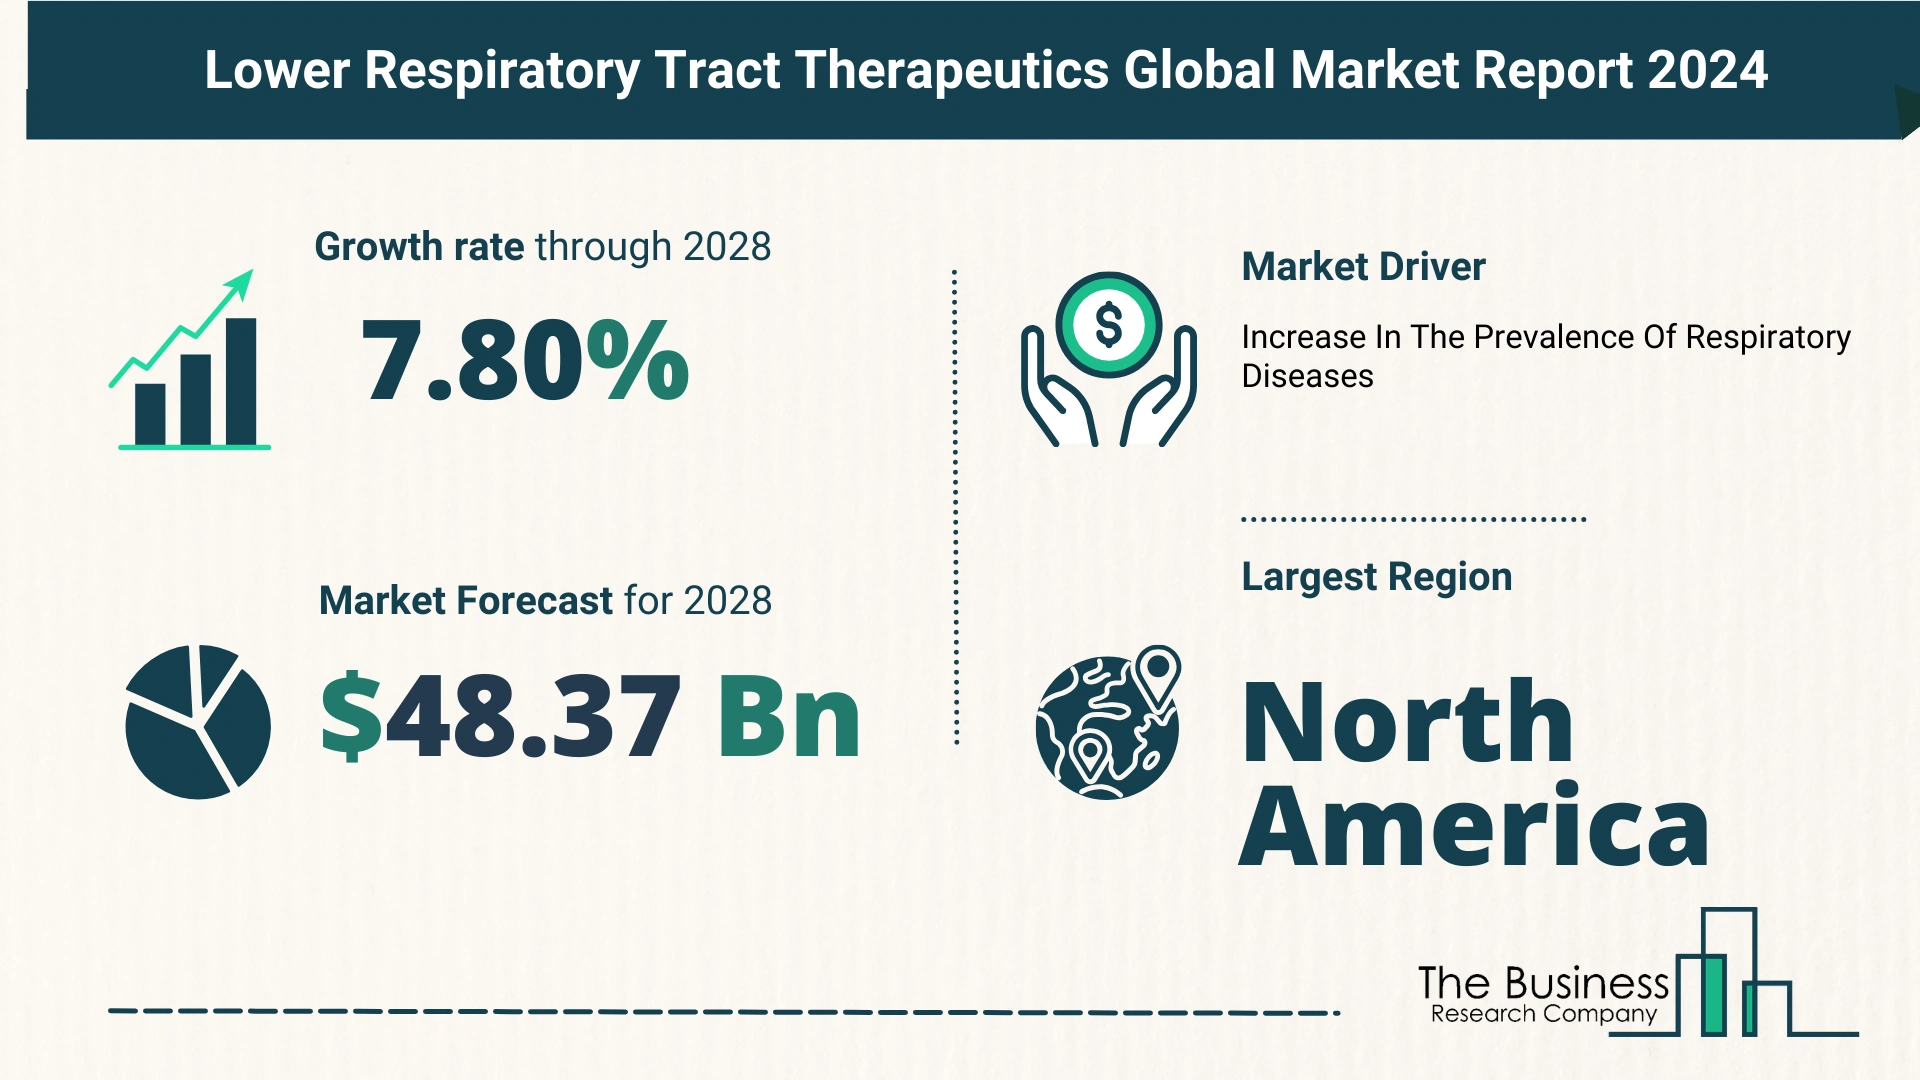 Global Lower Respiratory Tract Therapeutics Market